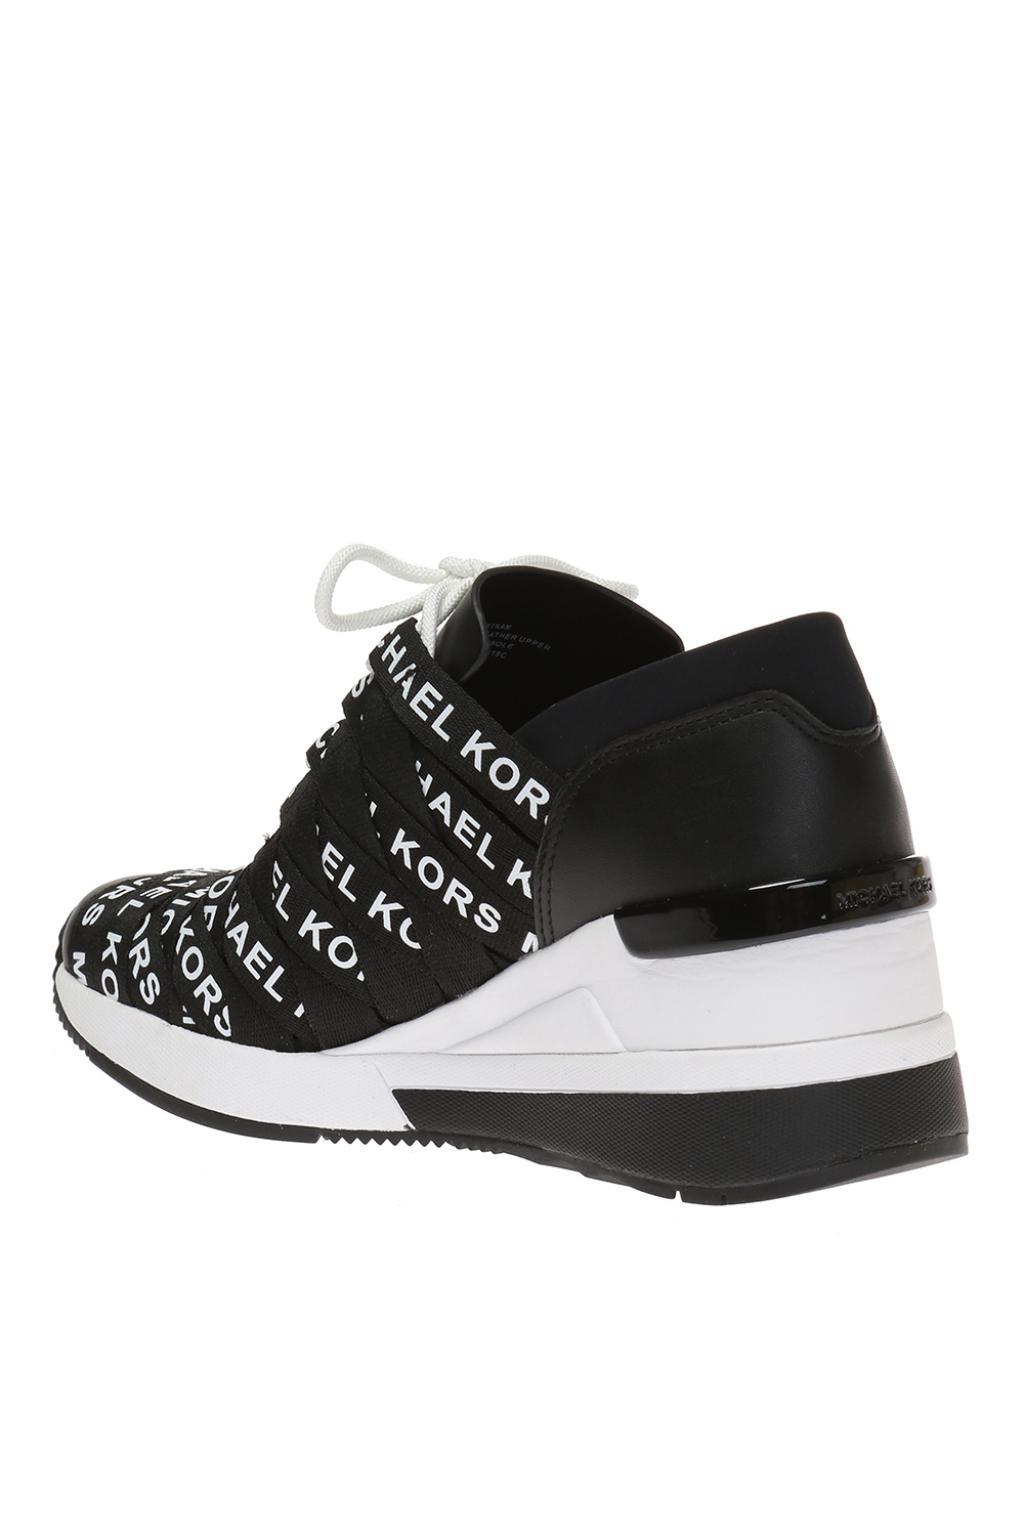 Michael Kors Leather 'cydney' Wedge Sneakers in Black - Lyst